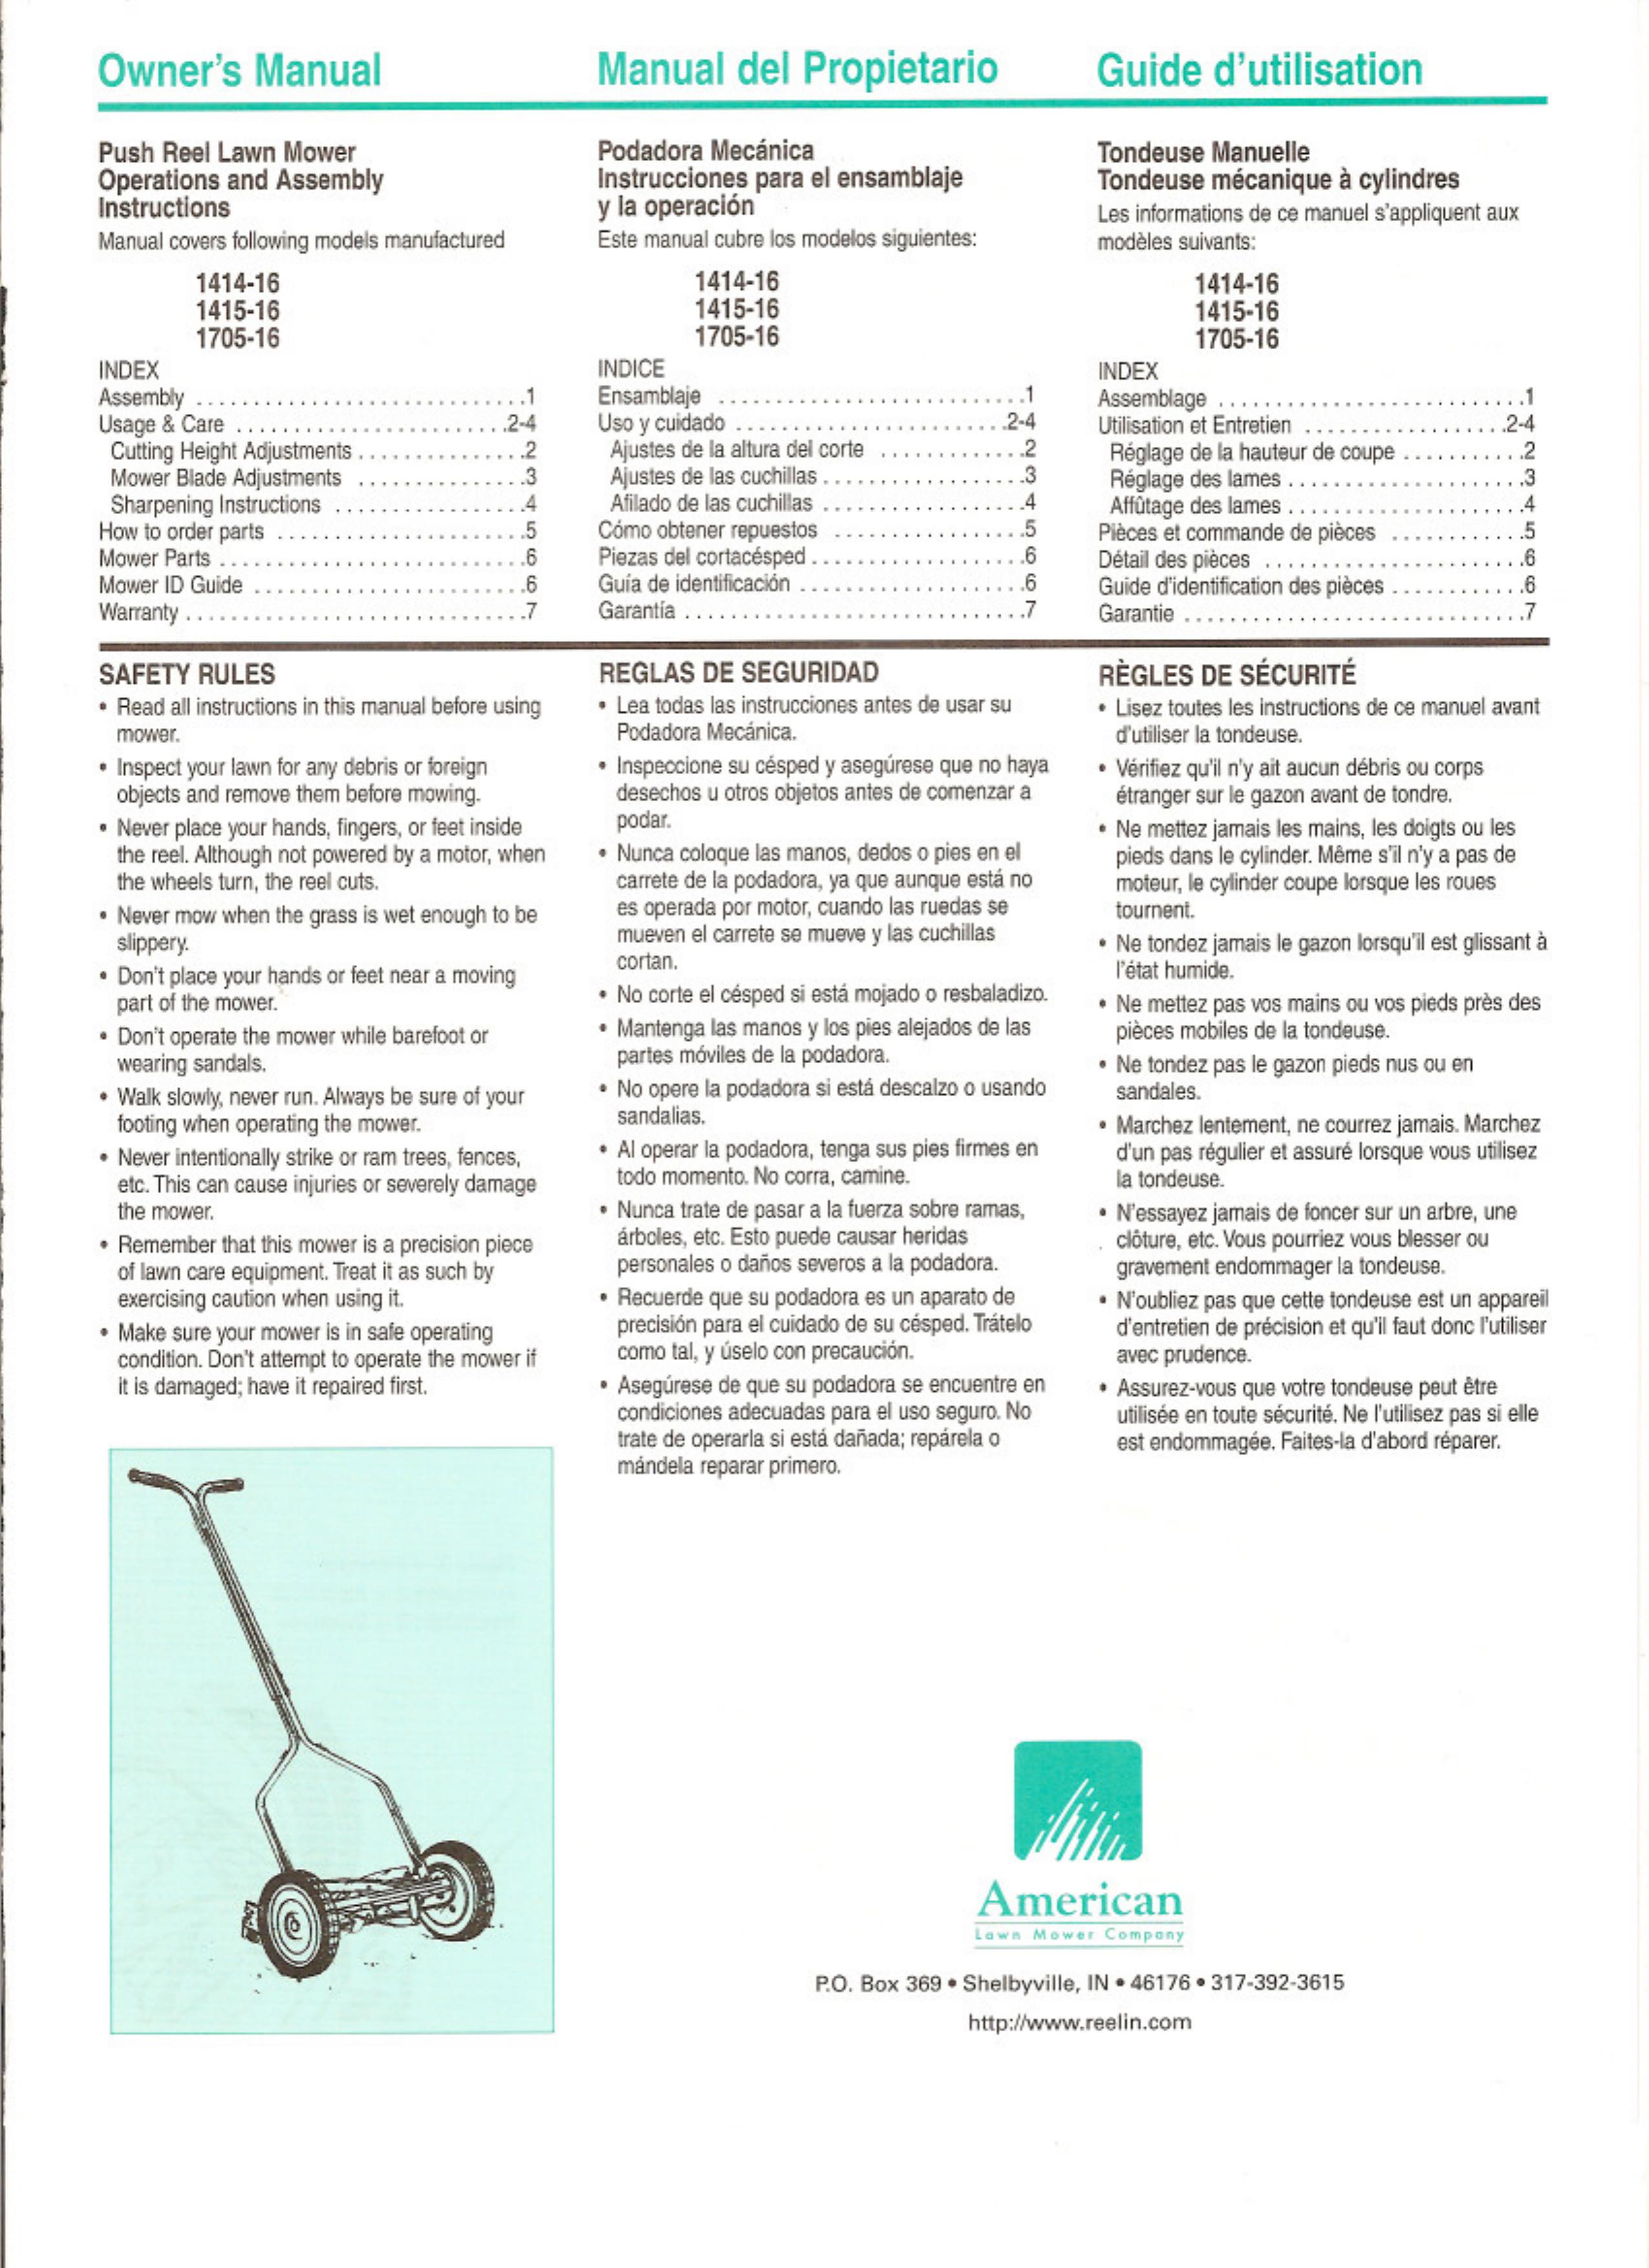 American Lawn Mower Co. 1705-16 Lawn Mower User Manual